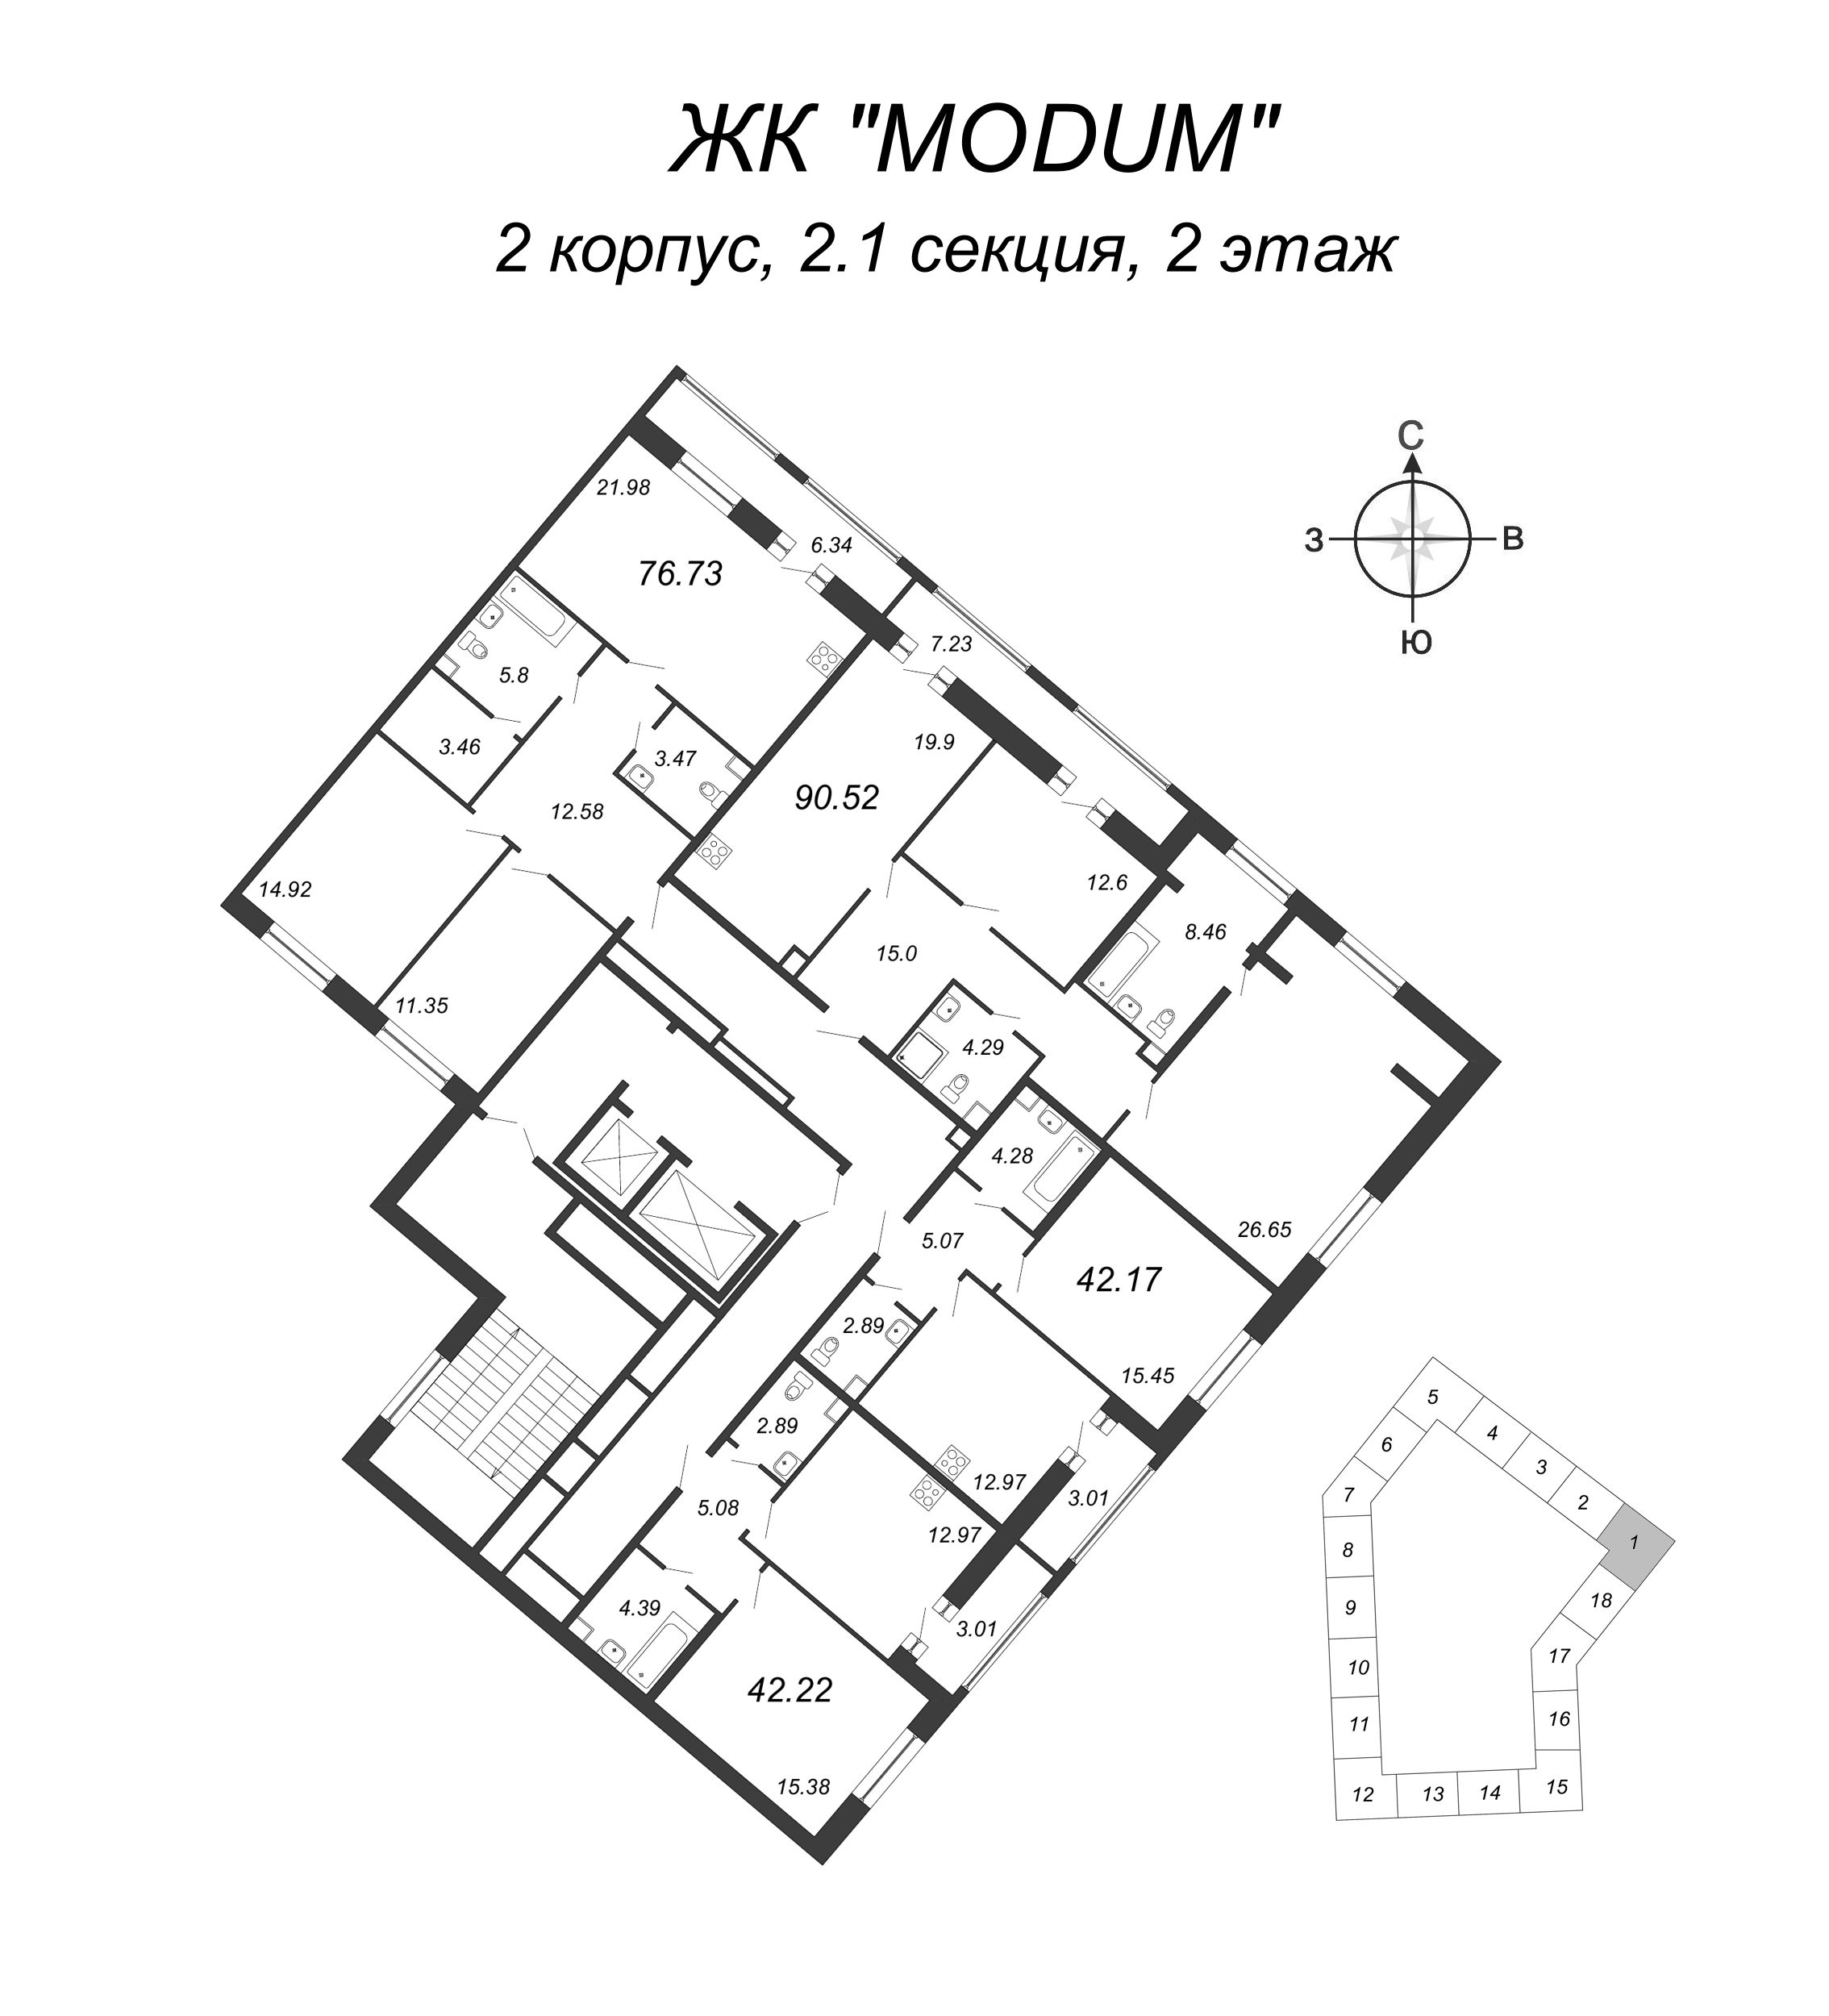 3-комнатная (Евро) квартира, 90.52 м² - планировка этажа